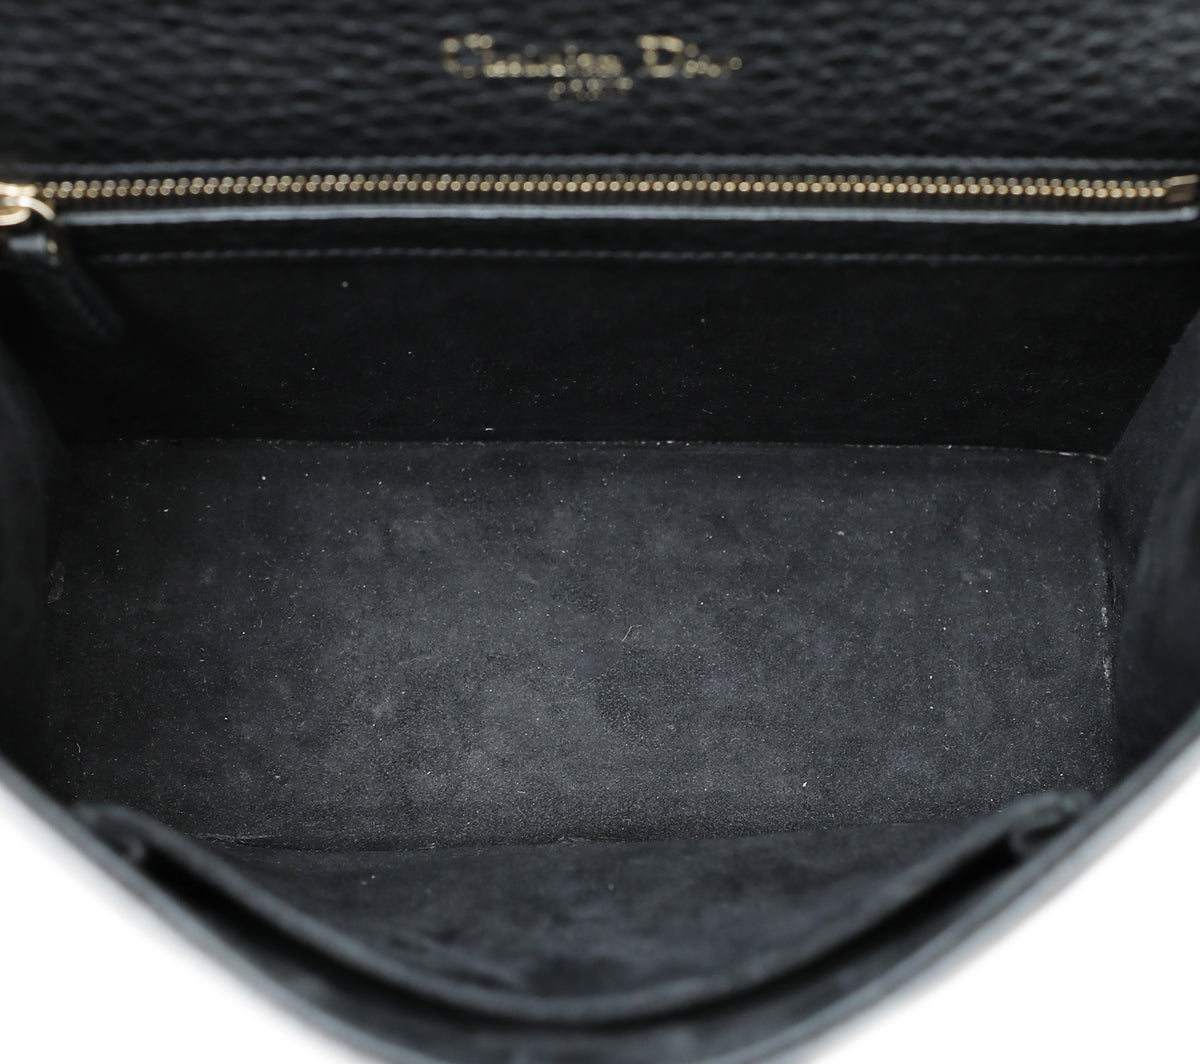 Christian Dior Black Diorama Small Flap Small Bag